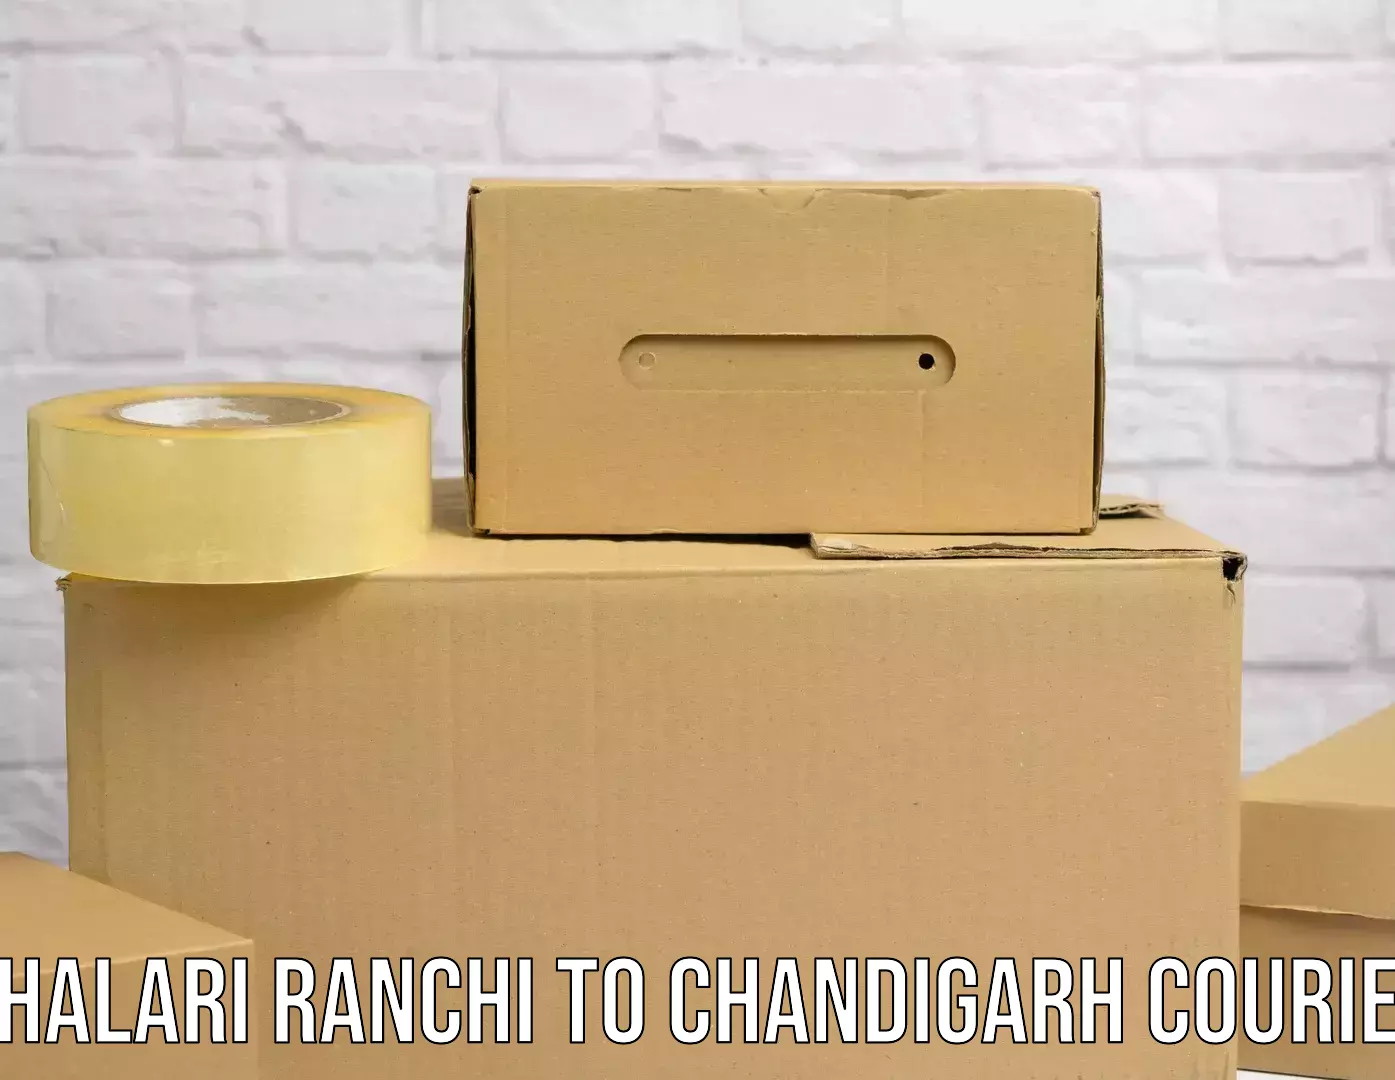 Smart courier technologies Khalari Ranchi to Chandigarh